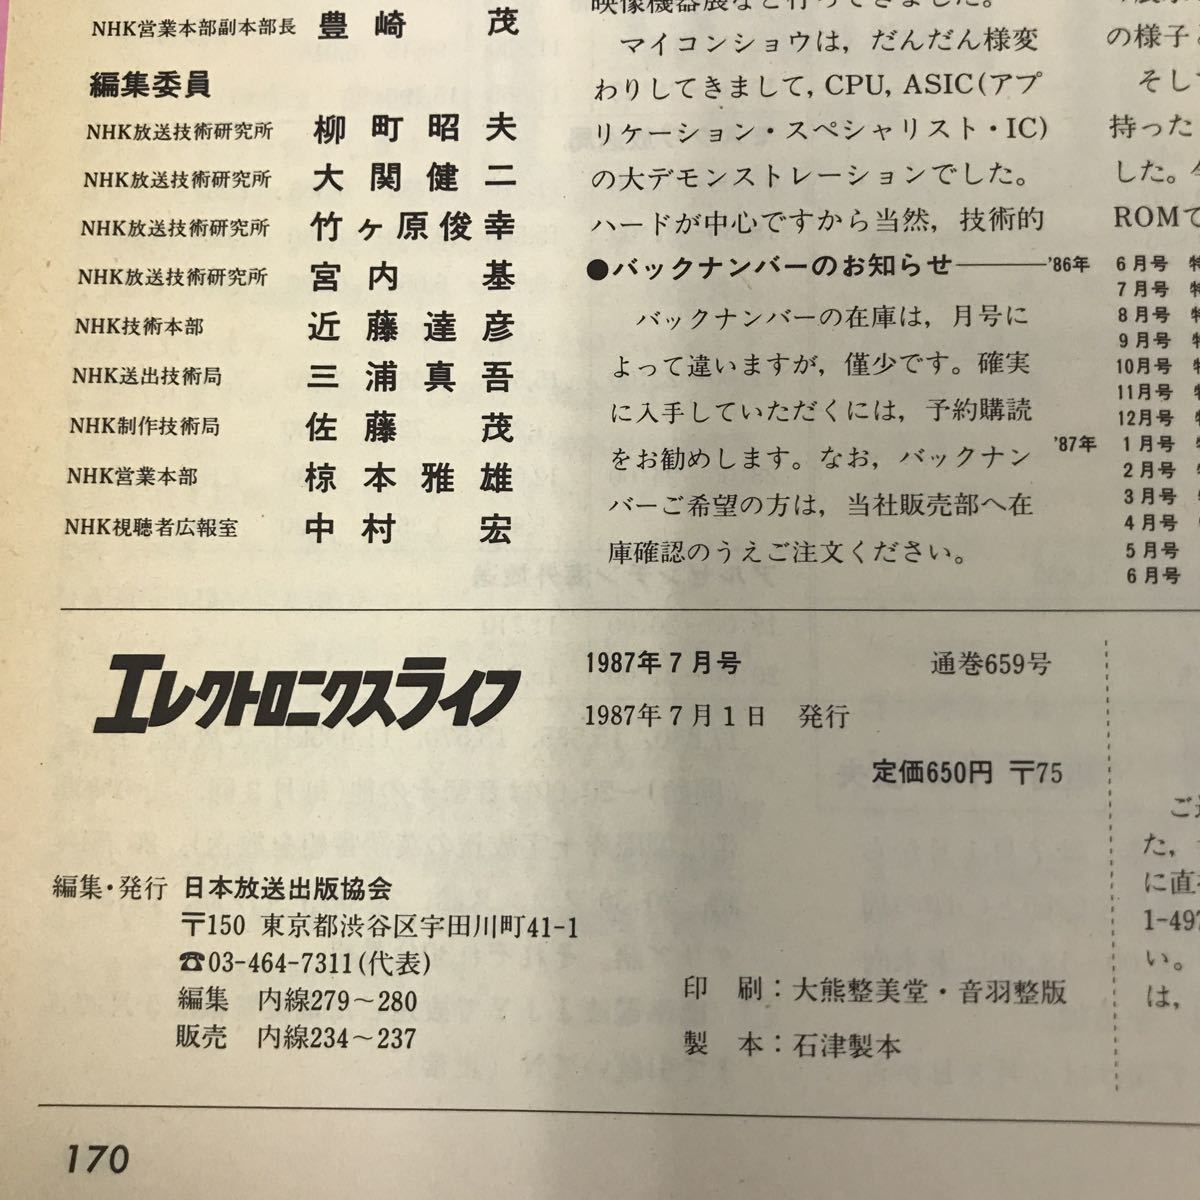 B18-100 エレクトロニクスライフ 1987年7月号 通巻659号 特集 アナログIC活用技術 日本放送出版協会 背表紙に書き込み多数有り _画像5